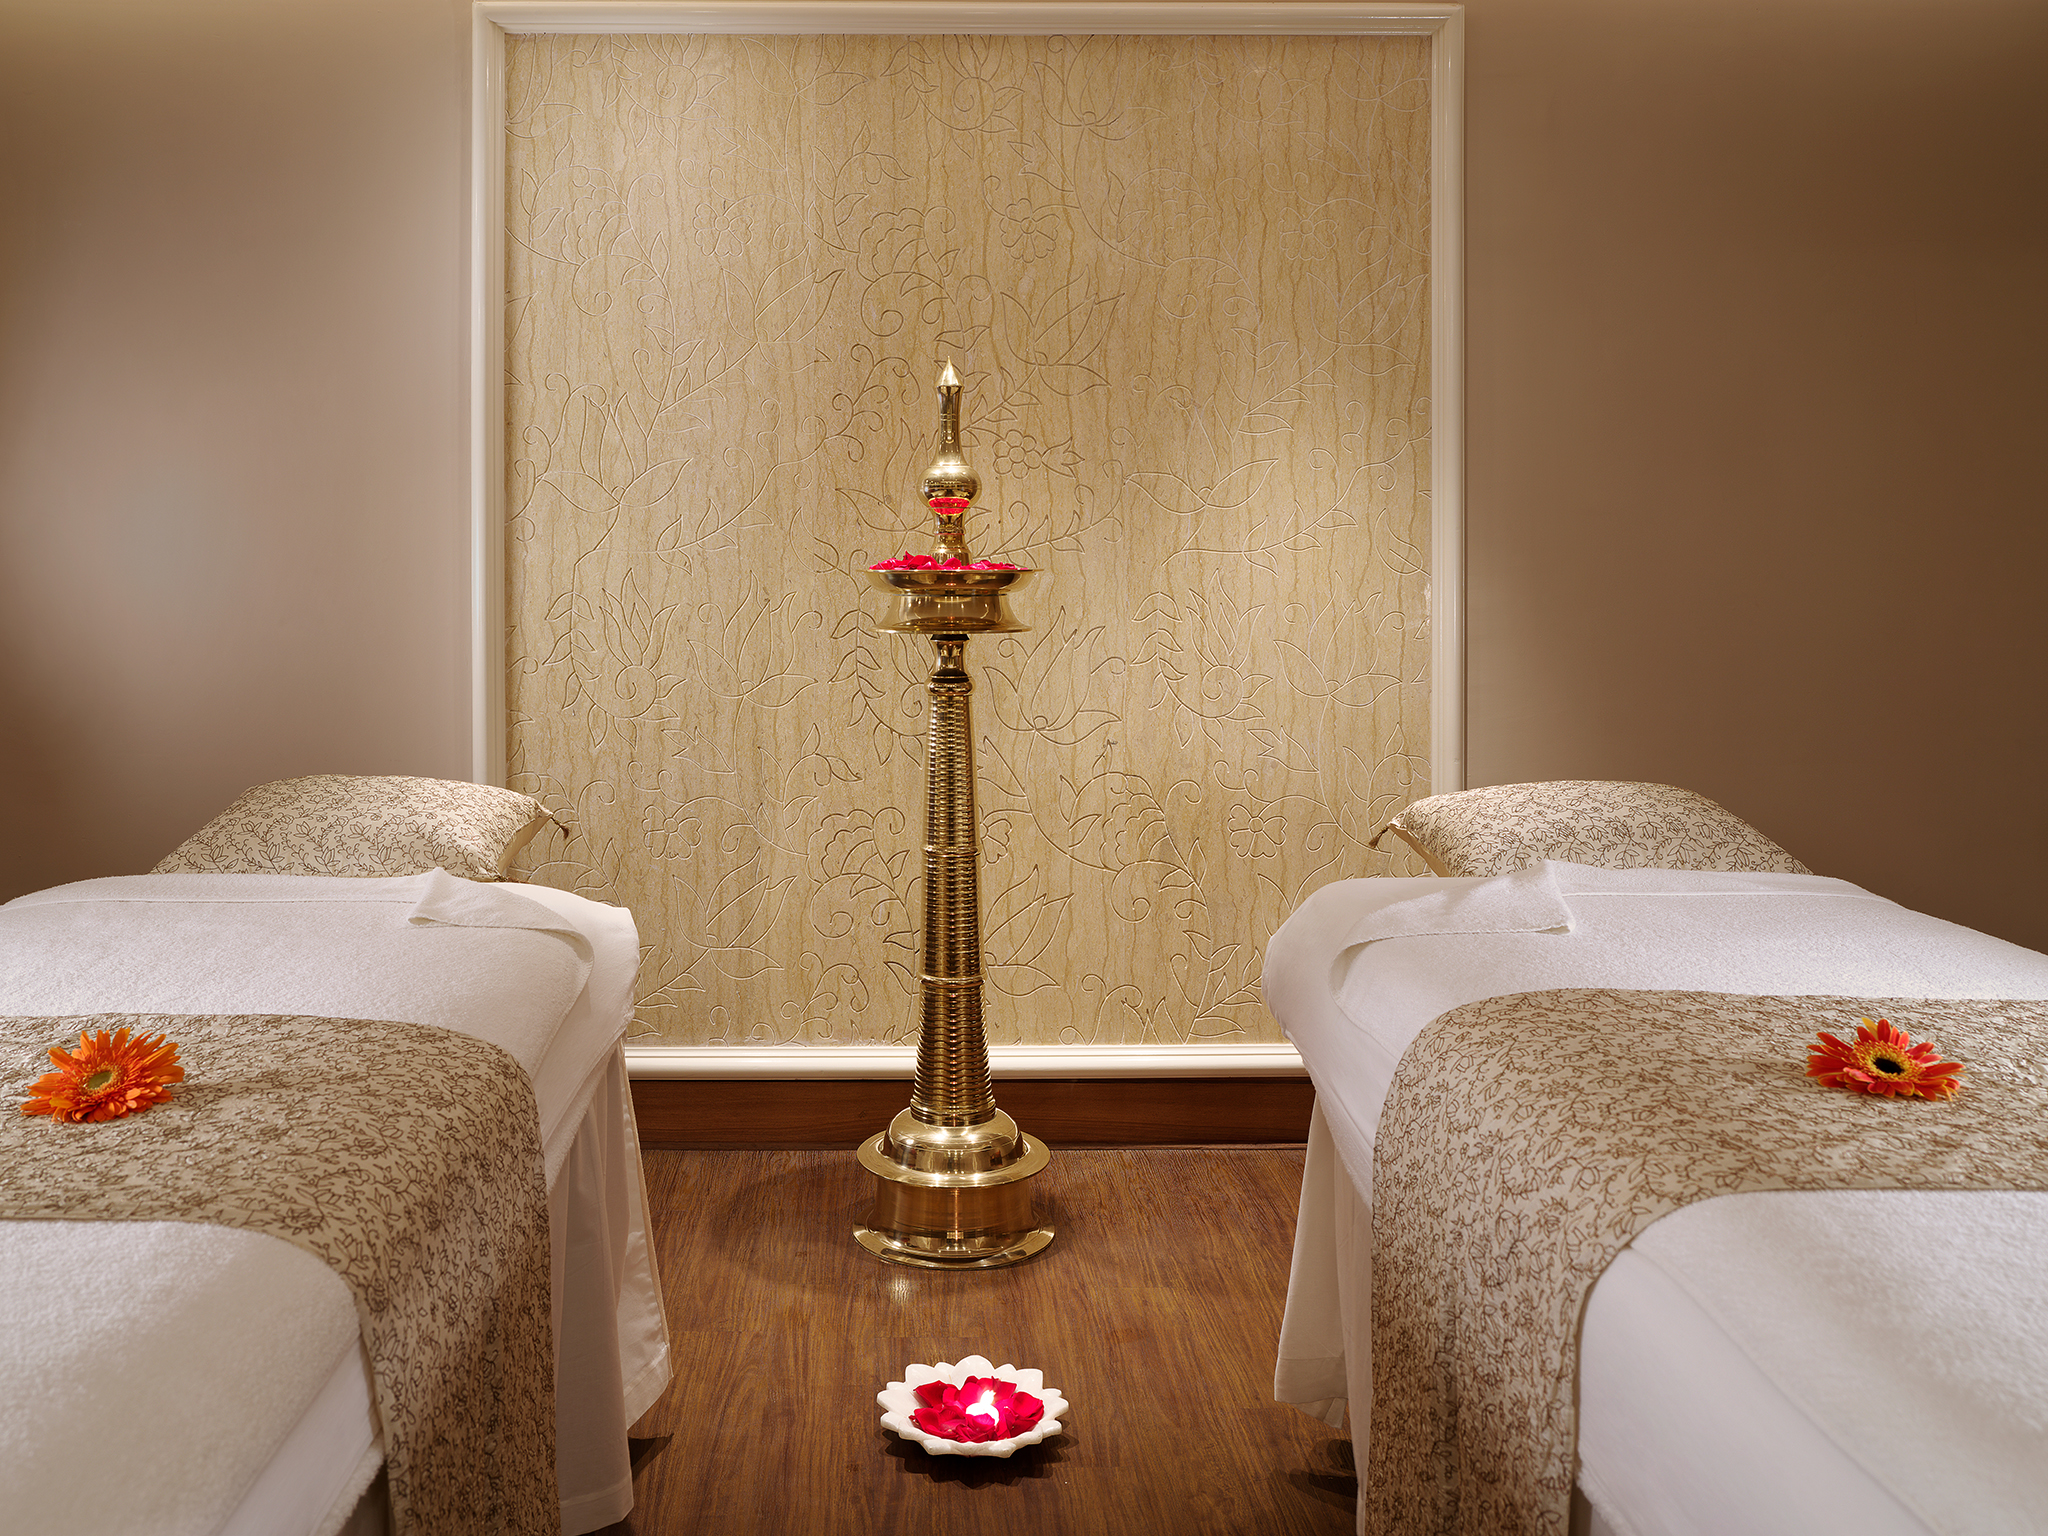 Ayurveda and luxury together in harmony at Jiva Spa